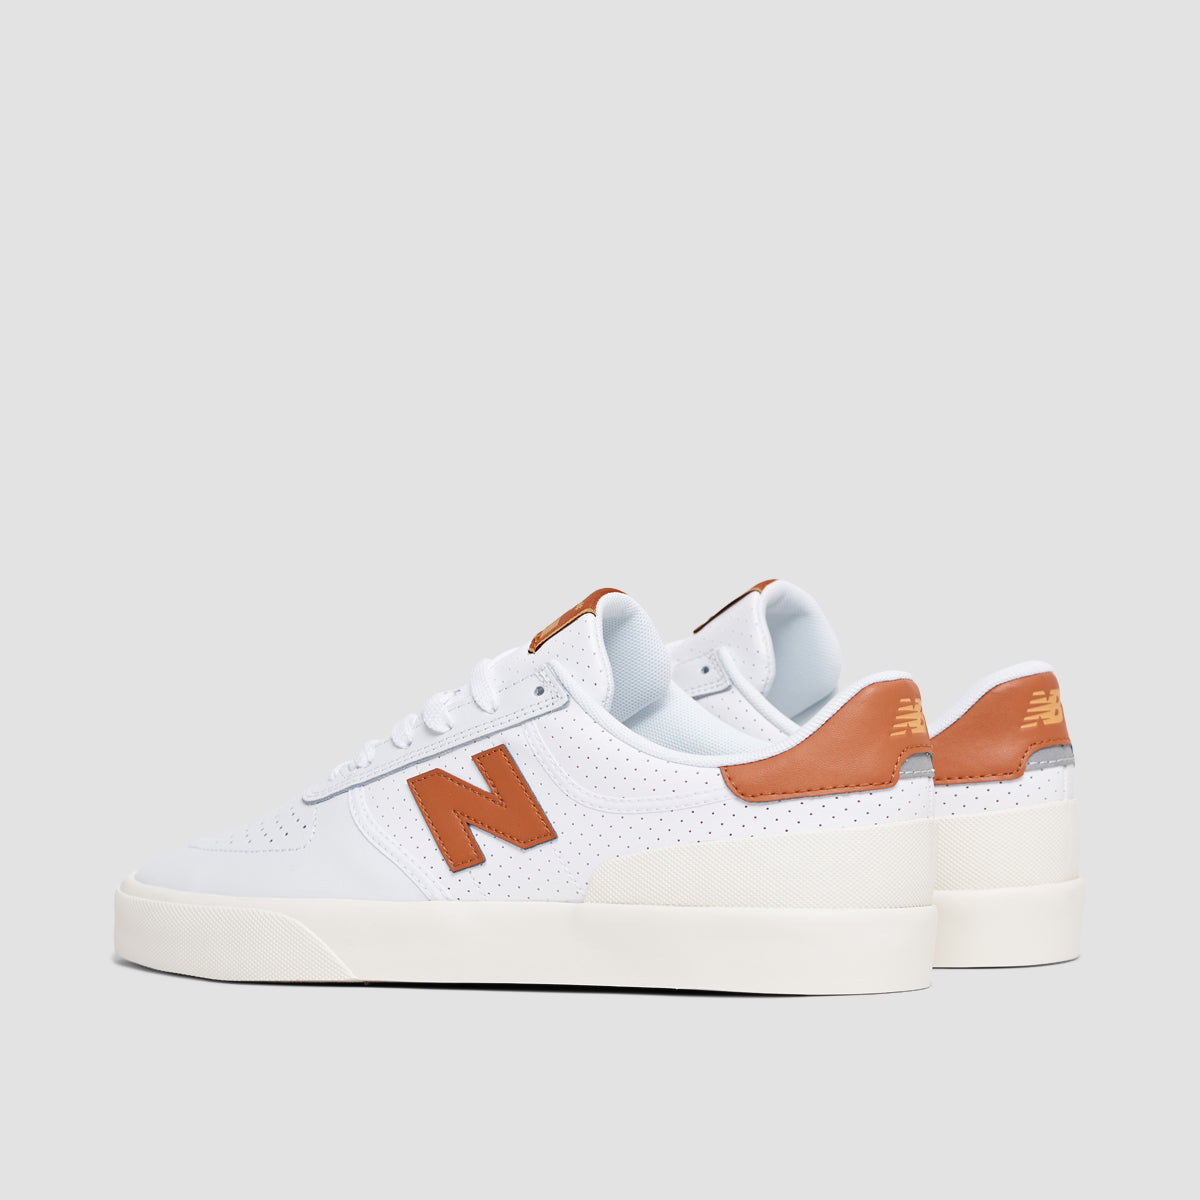 New Balance Numeric 272 Shoes - White/Copper